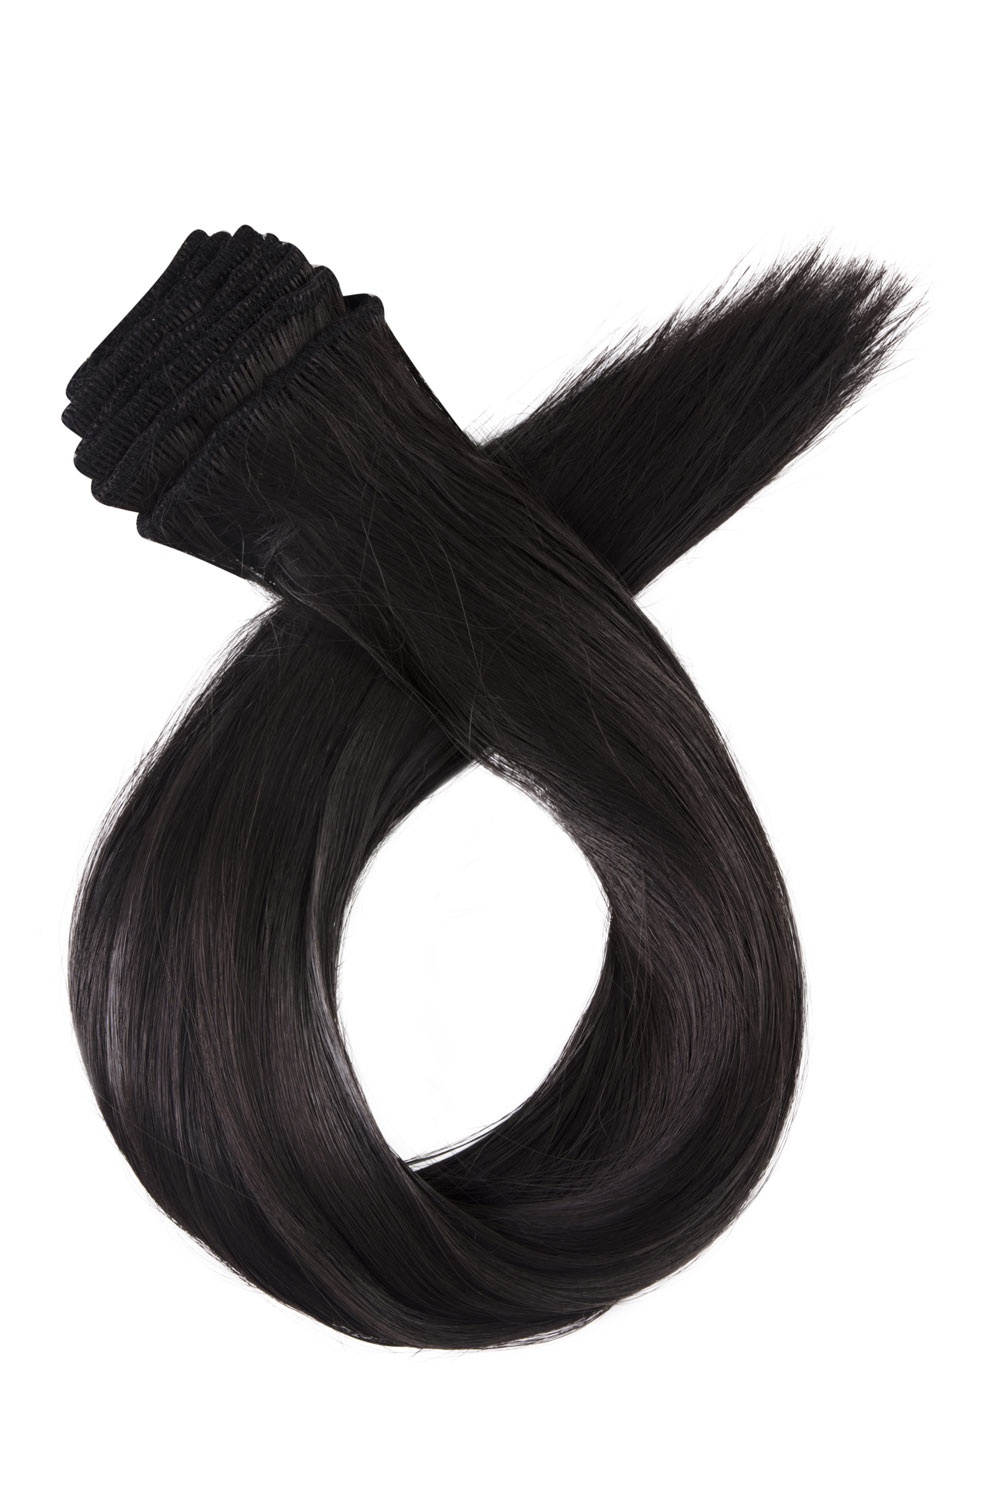 Stredne hnedé clip in vlasy, 50cm, 115g, farba 4